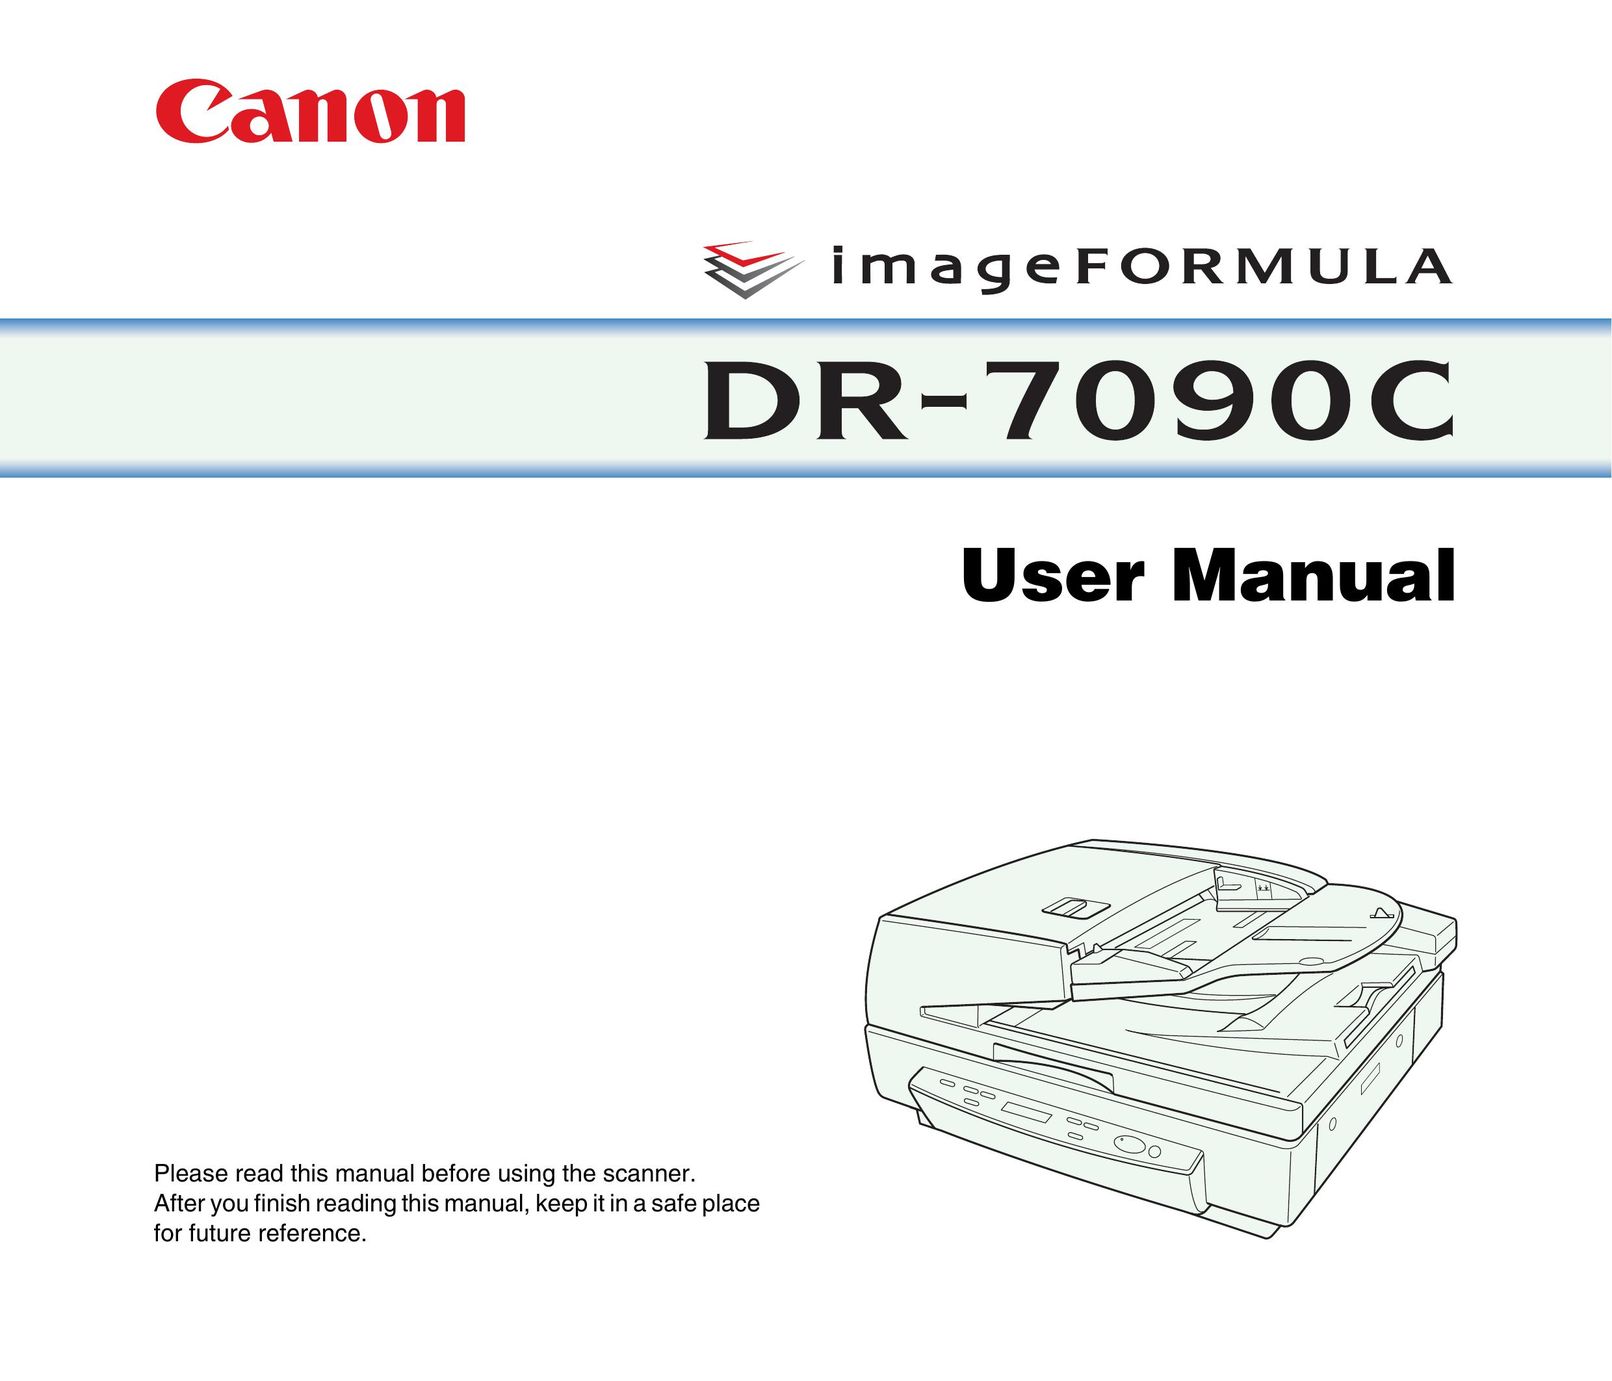 Cannon DR-7090C Scanner User Manual